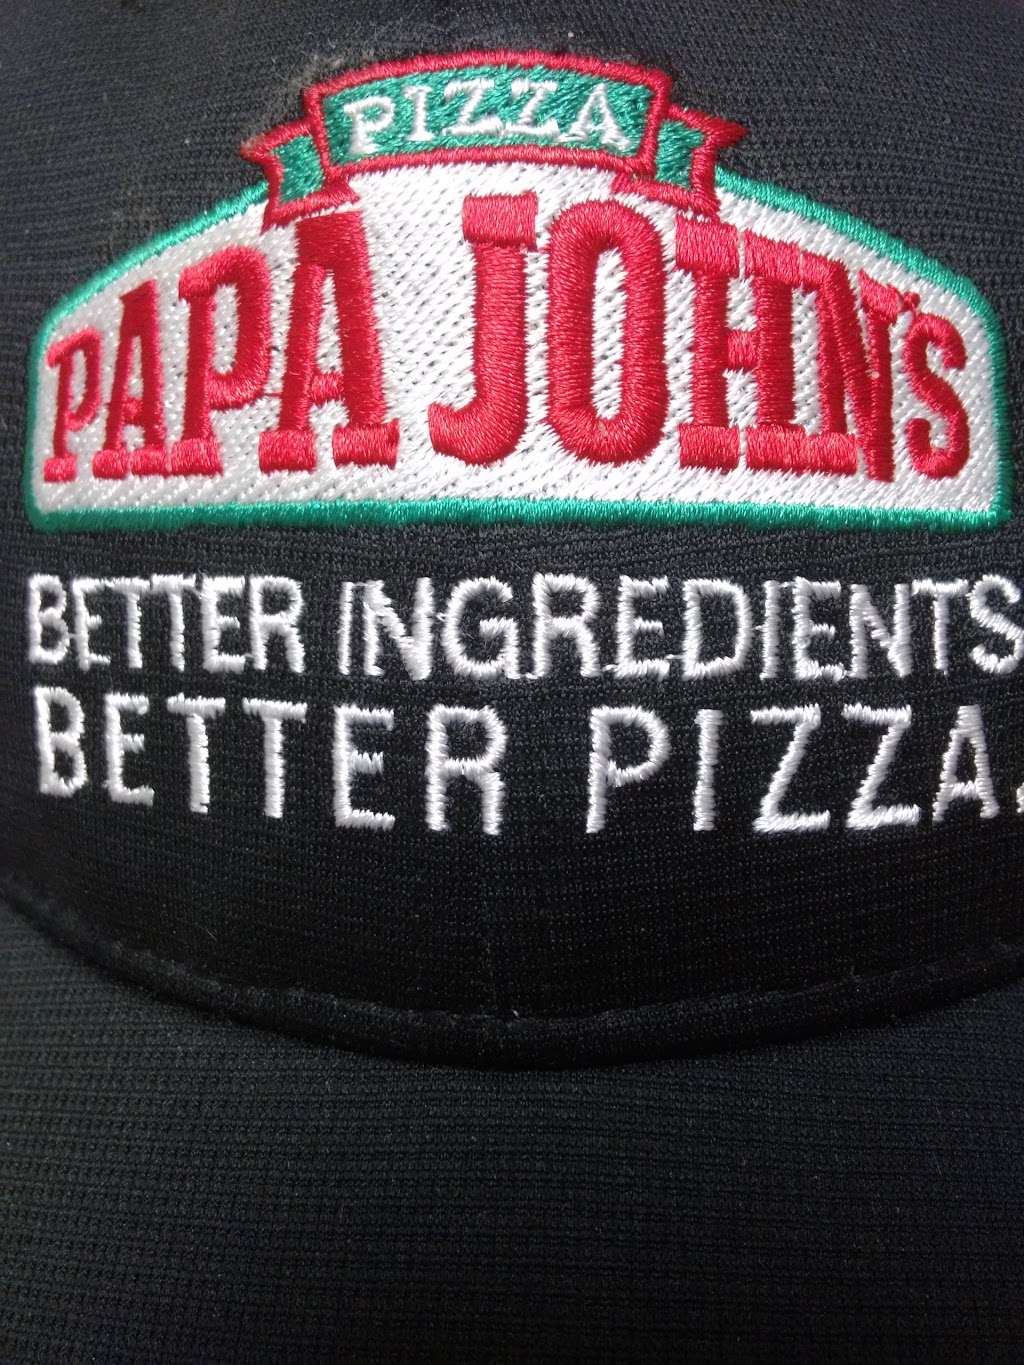 Papa Johns Pizza | 614 Erial Rd, Pine Hill, NJ 08021, USA | Phone: (856) 782-7888